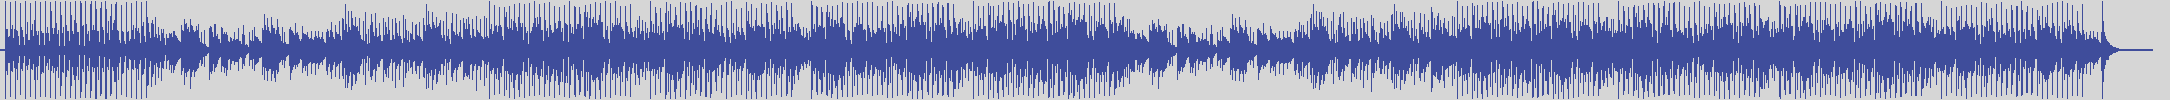 nf_boyz_records [NFY040] Alpha Carpet - Infinity [Illumination Mix] audio wave form